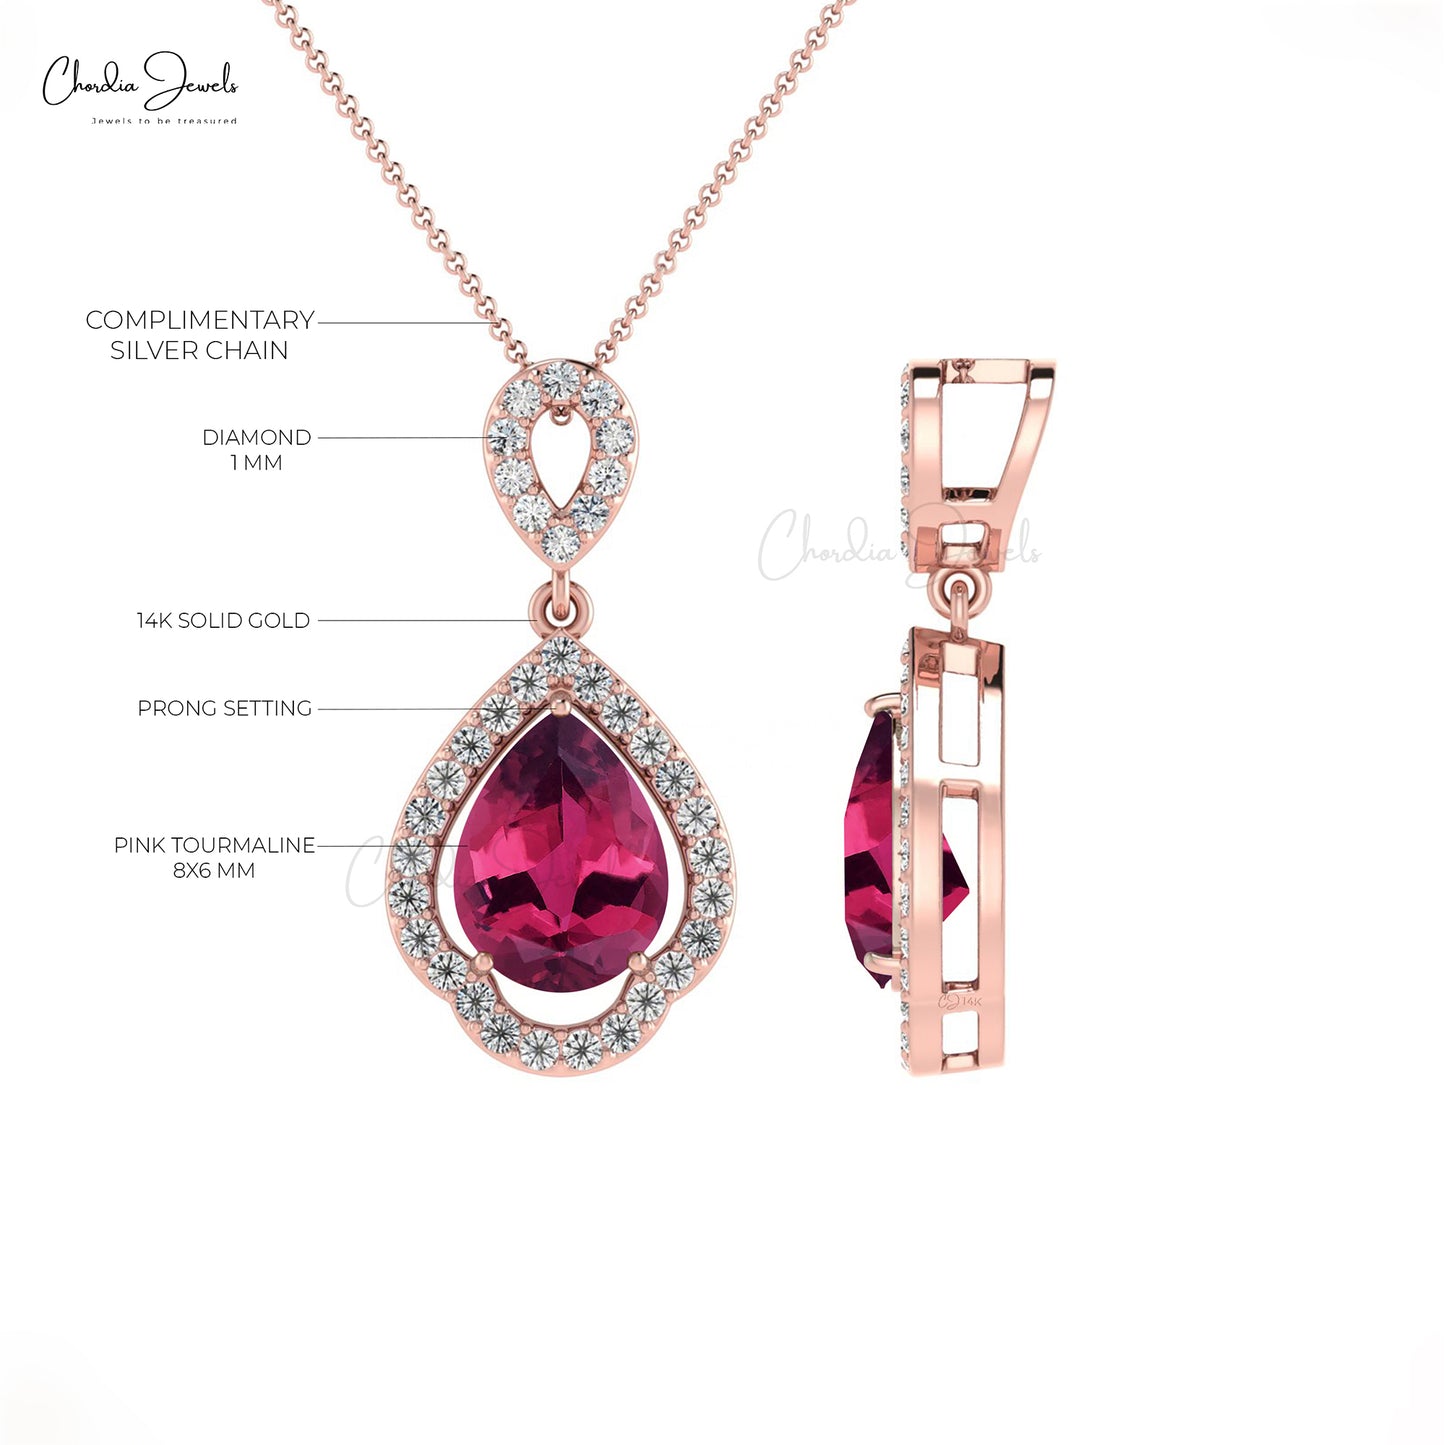 Genuine Pink Tourmaline Art Deco Pendant 14k Solid Gold Diamond Pendant 8x6mm Pear Cut Gemstone Pendant For Women's